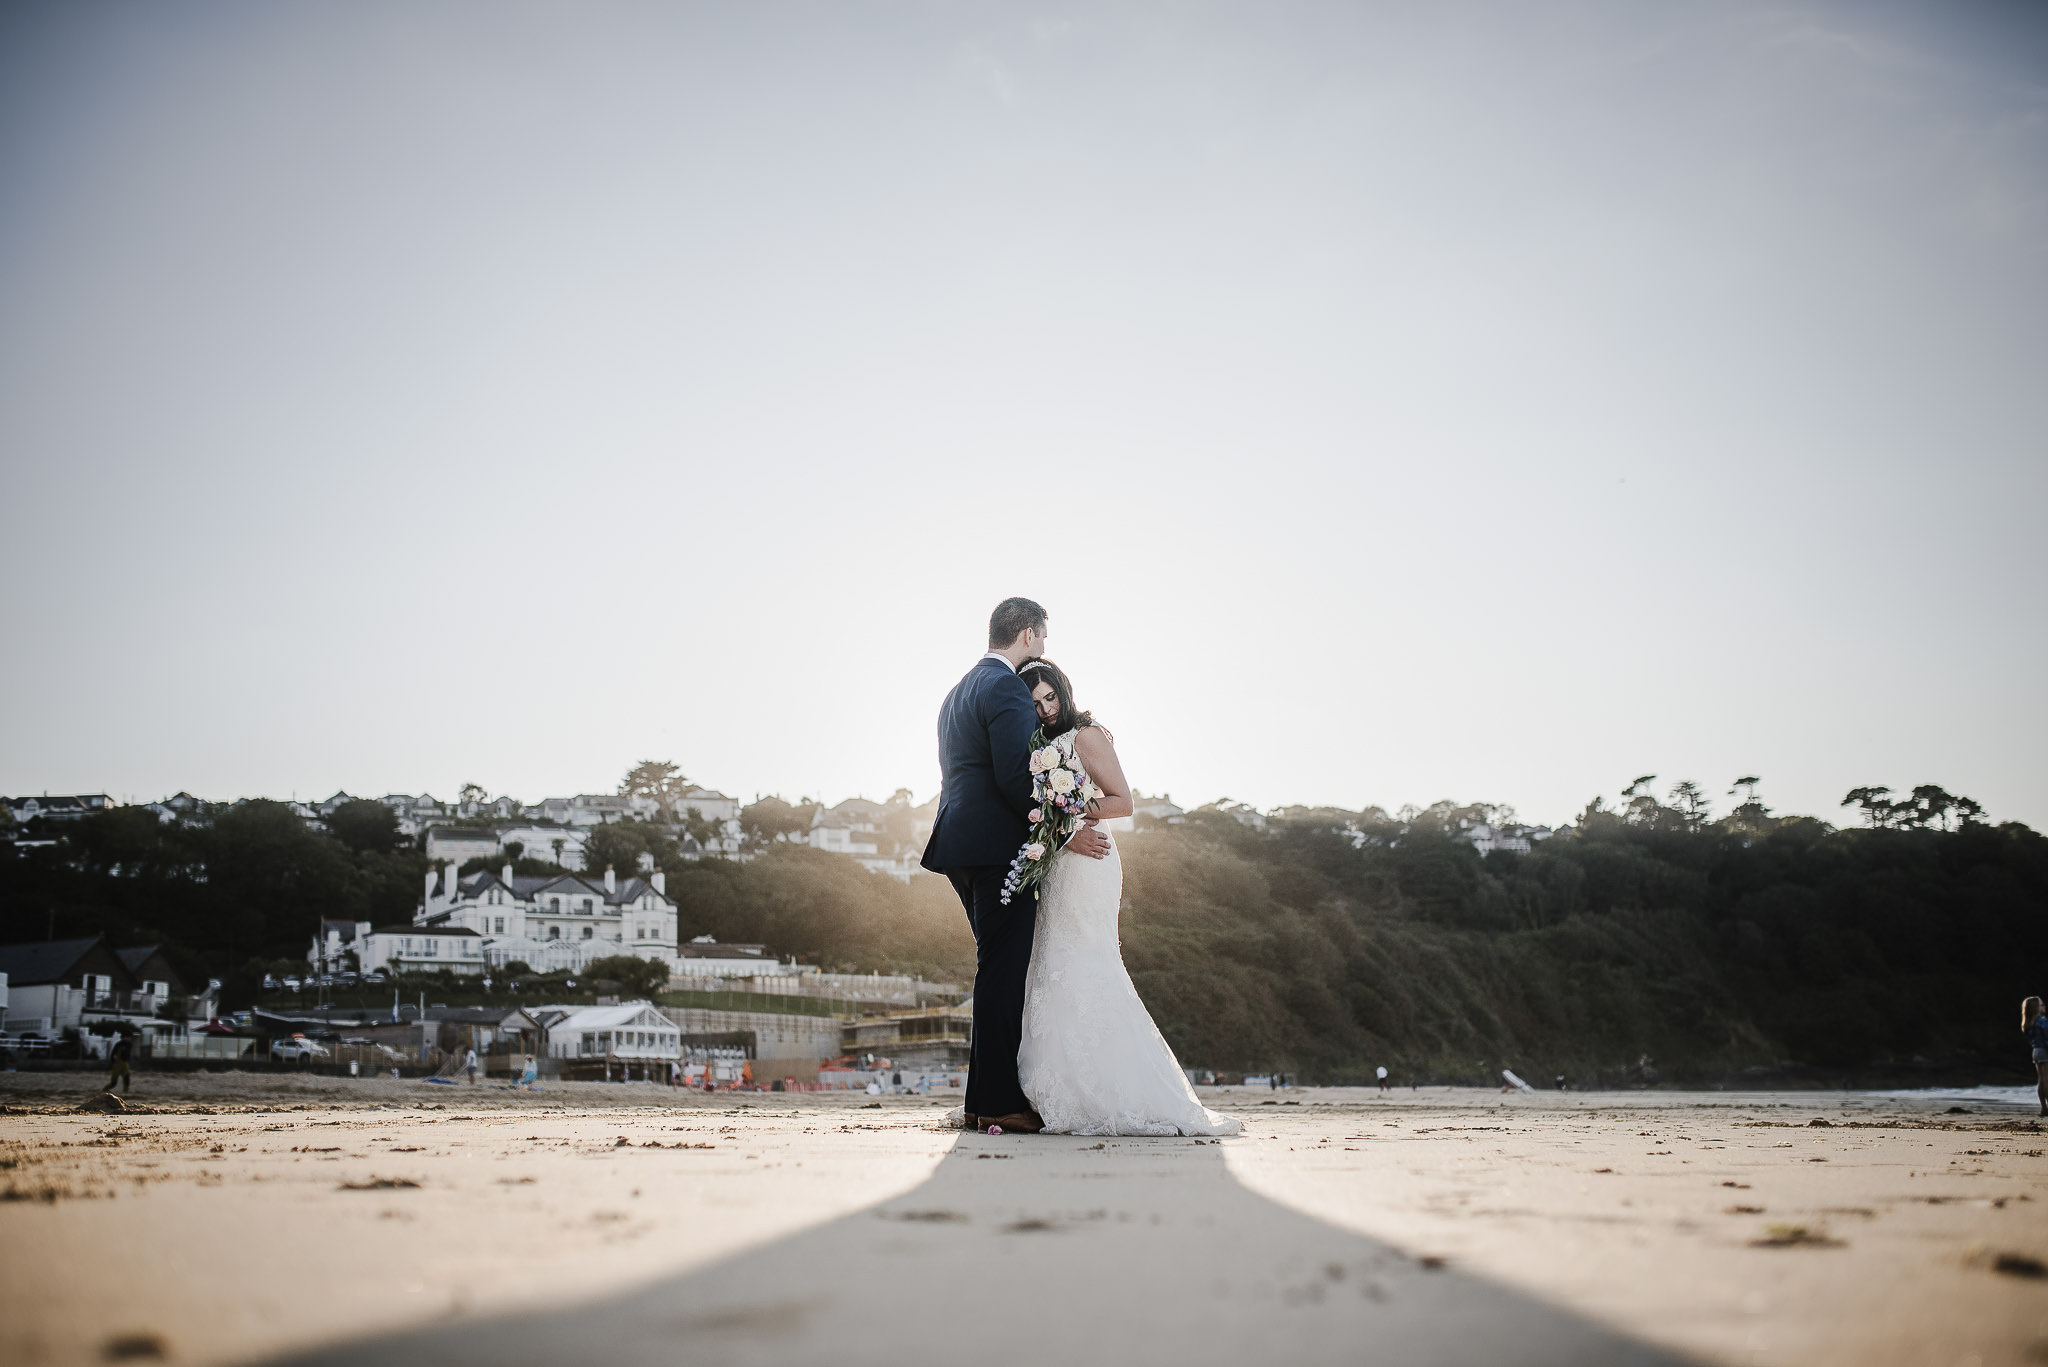 BEST-WEDDING-PHOTOGRAPHER-CORNWALL-2018-81.jpg